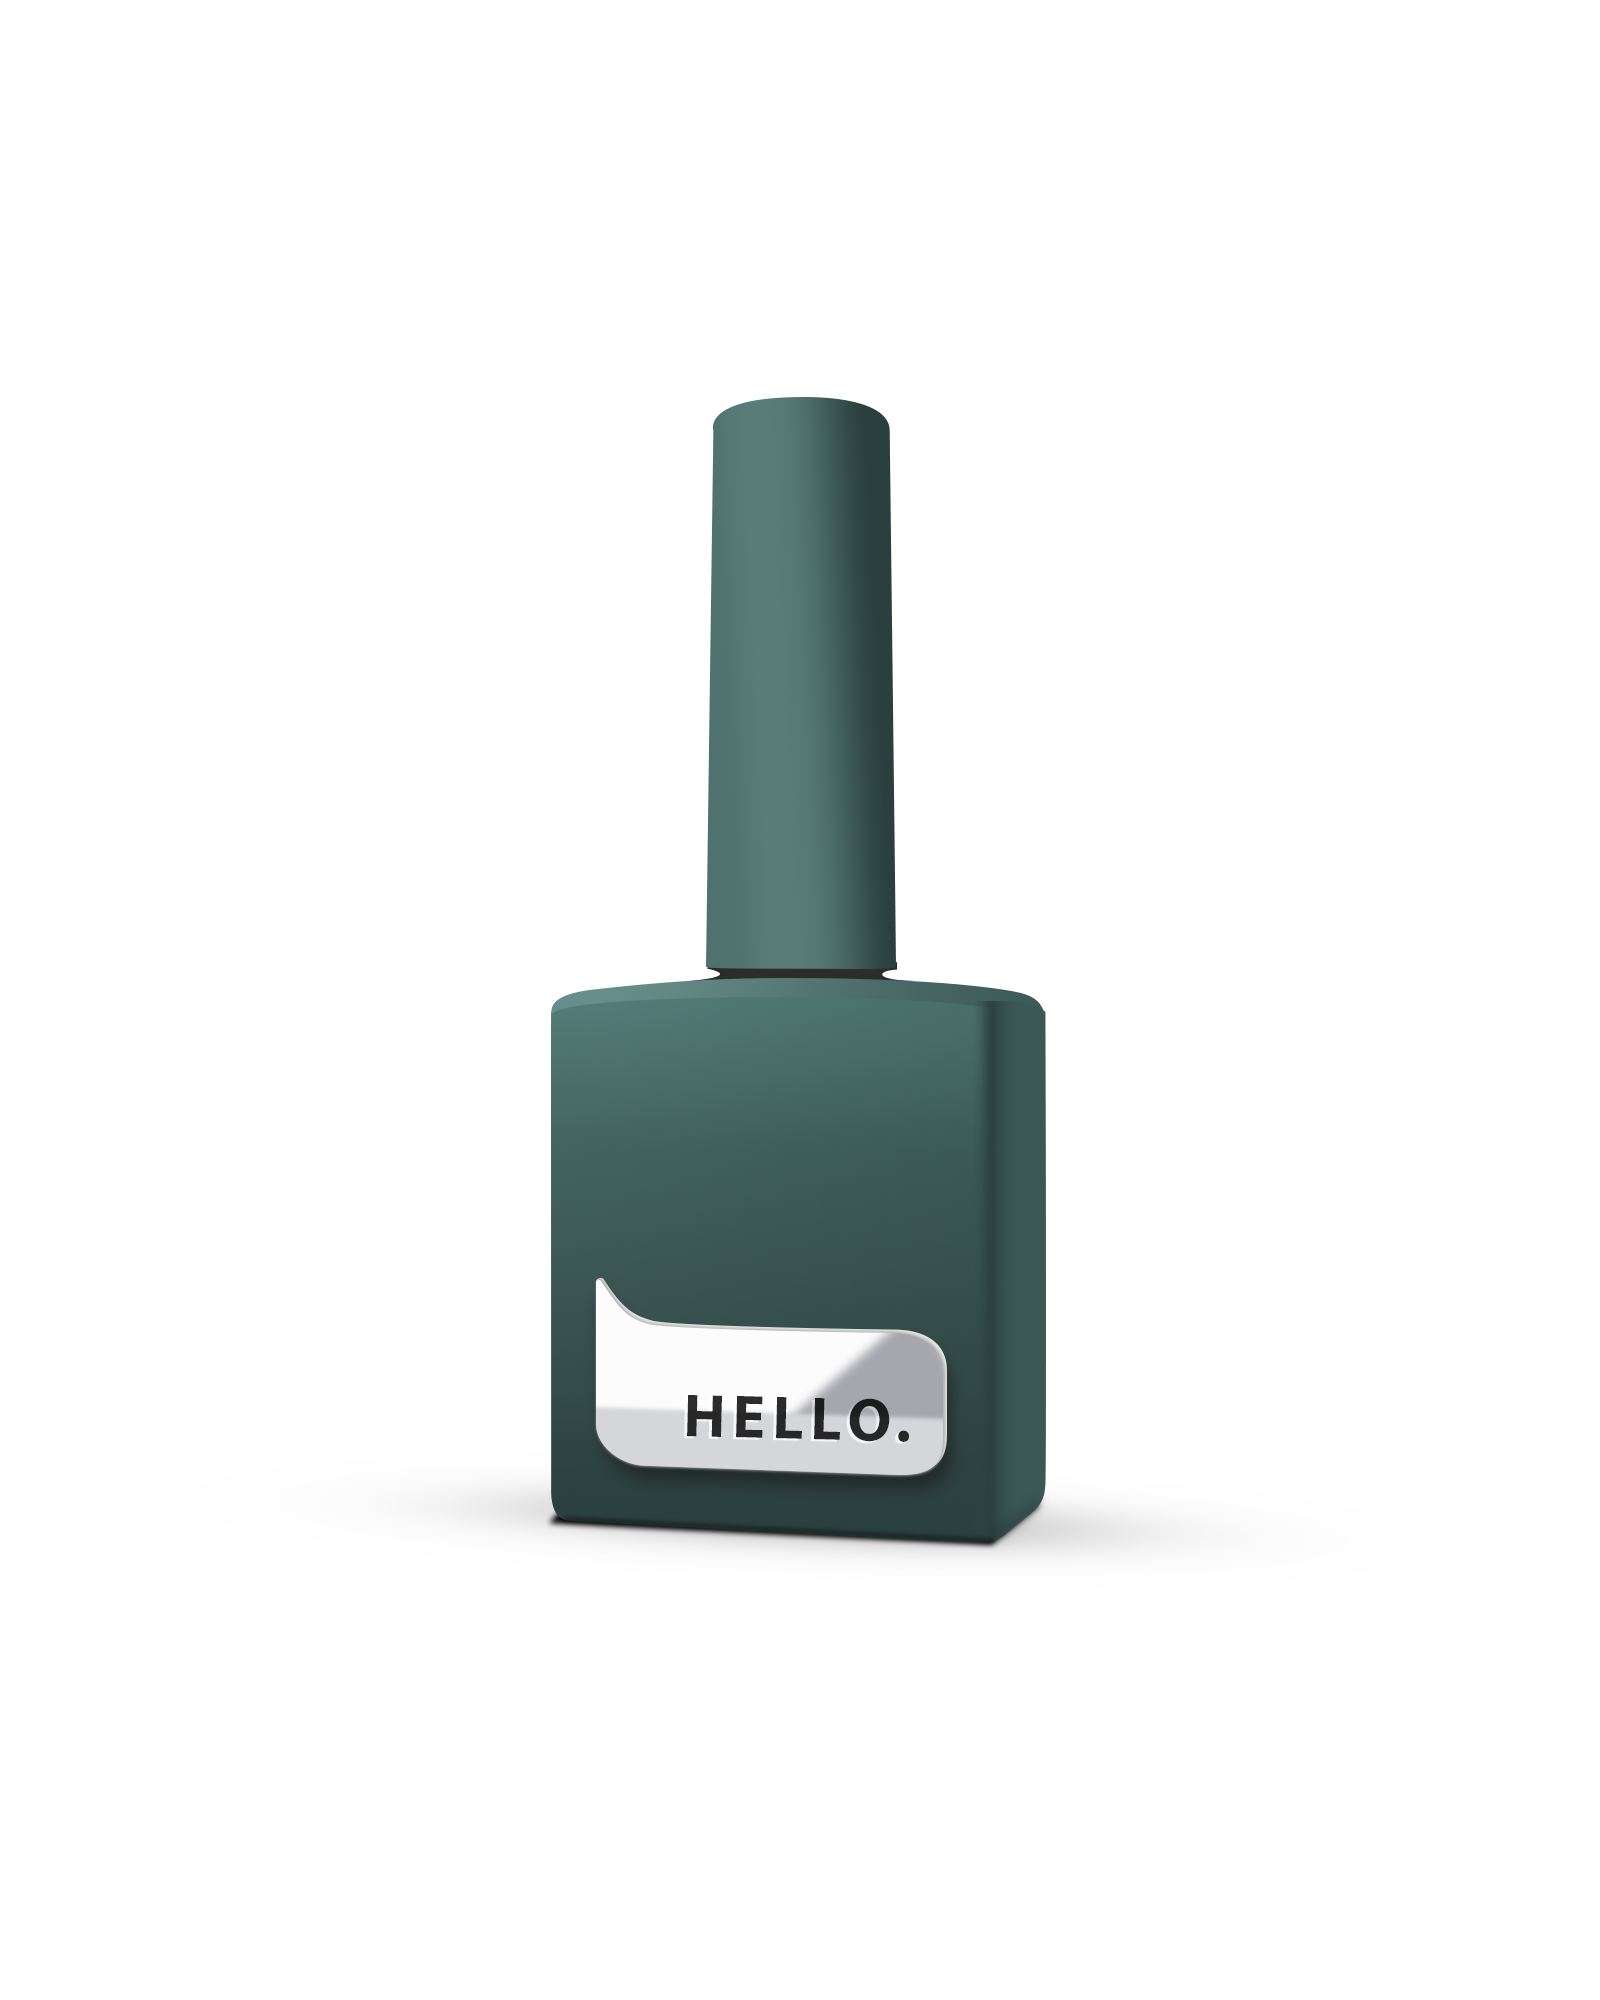 HELLO Tint base LEAF. Color: Enebro